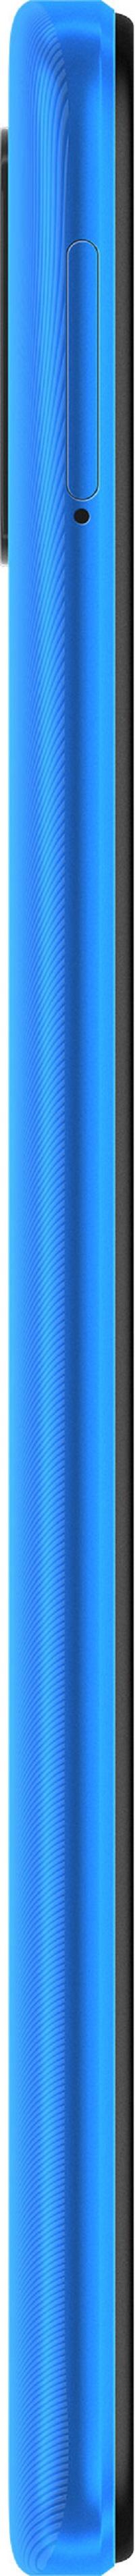 Selected image for Xiaomi Pametni telefon Redmi 9A 32gb plavi